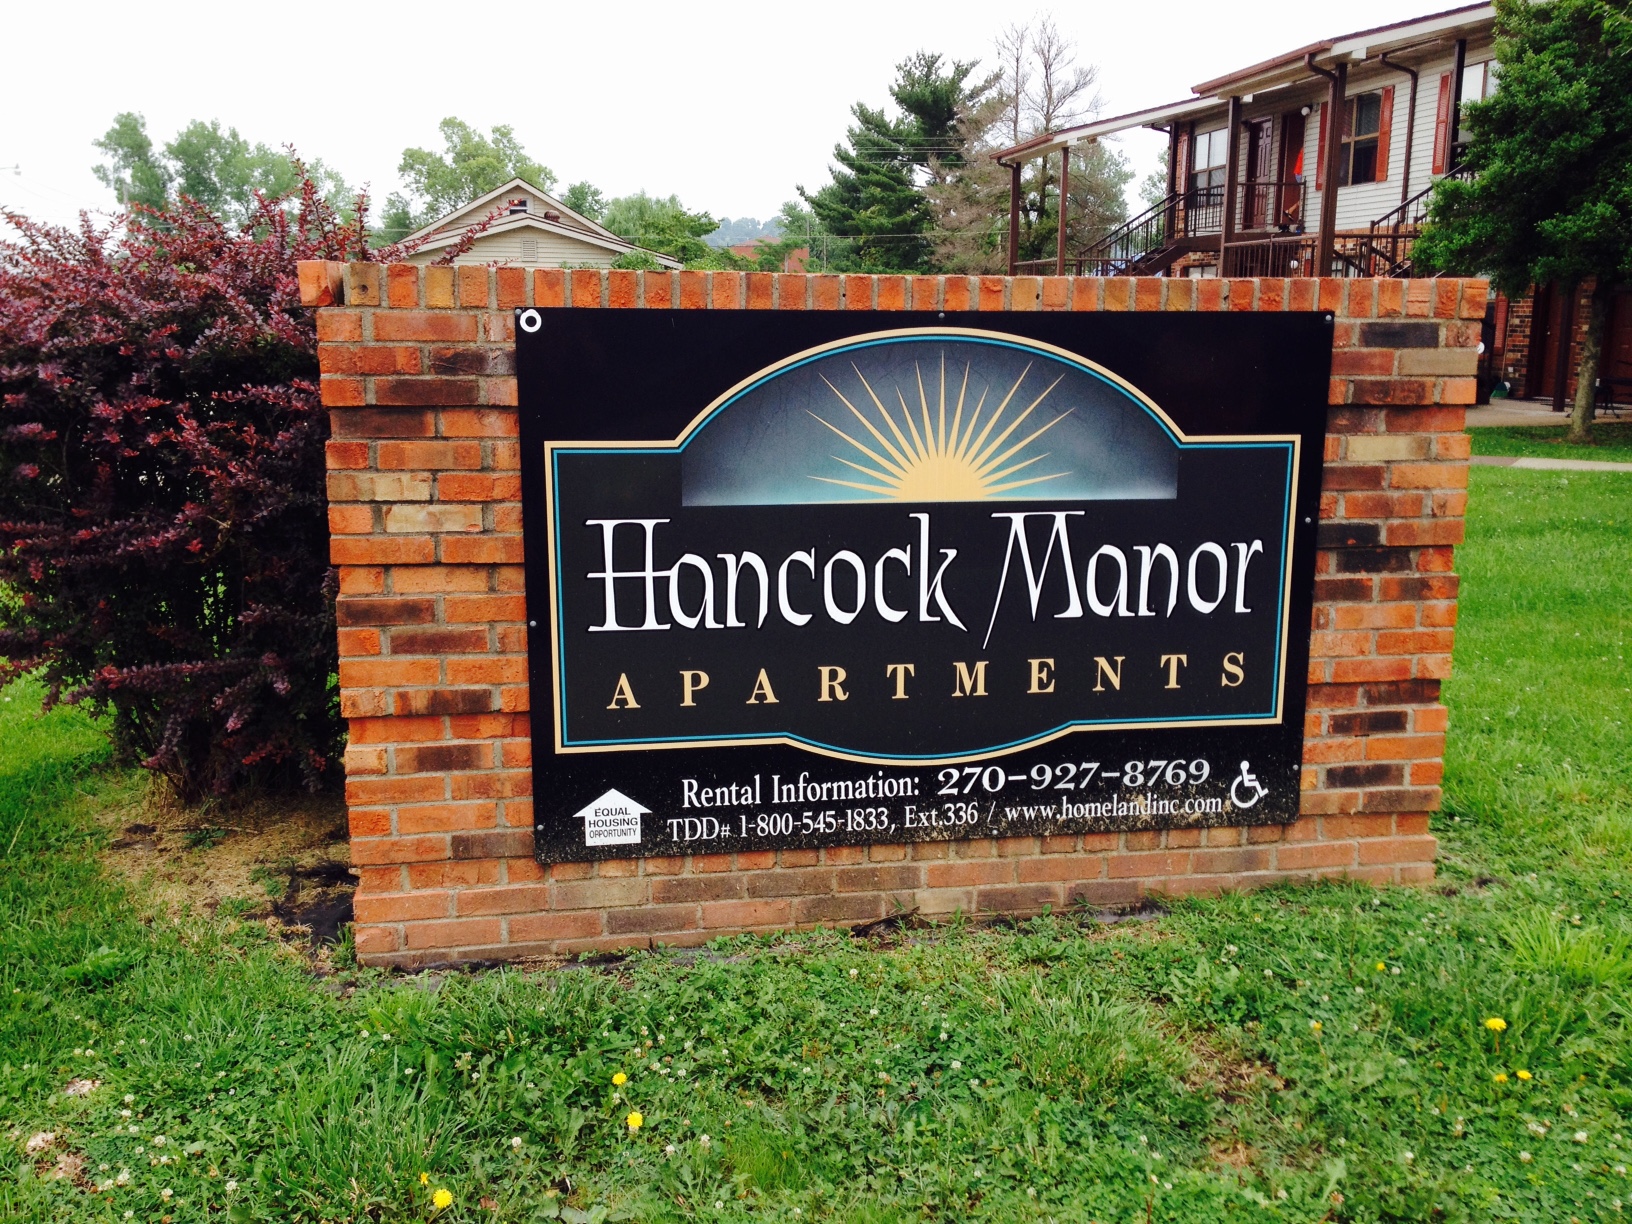 Hancock Manor Apartments